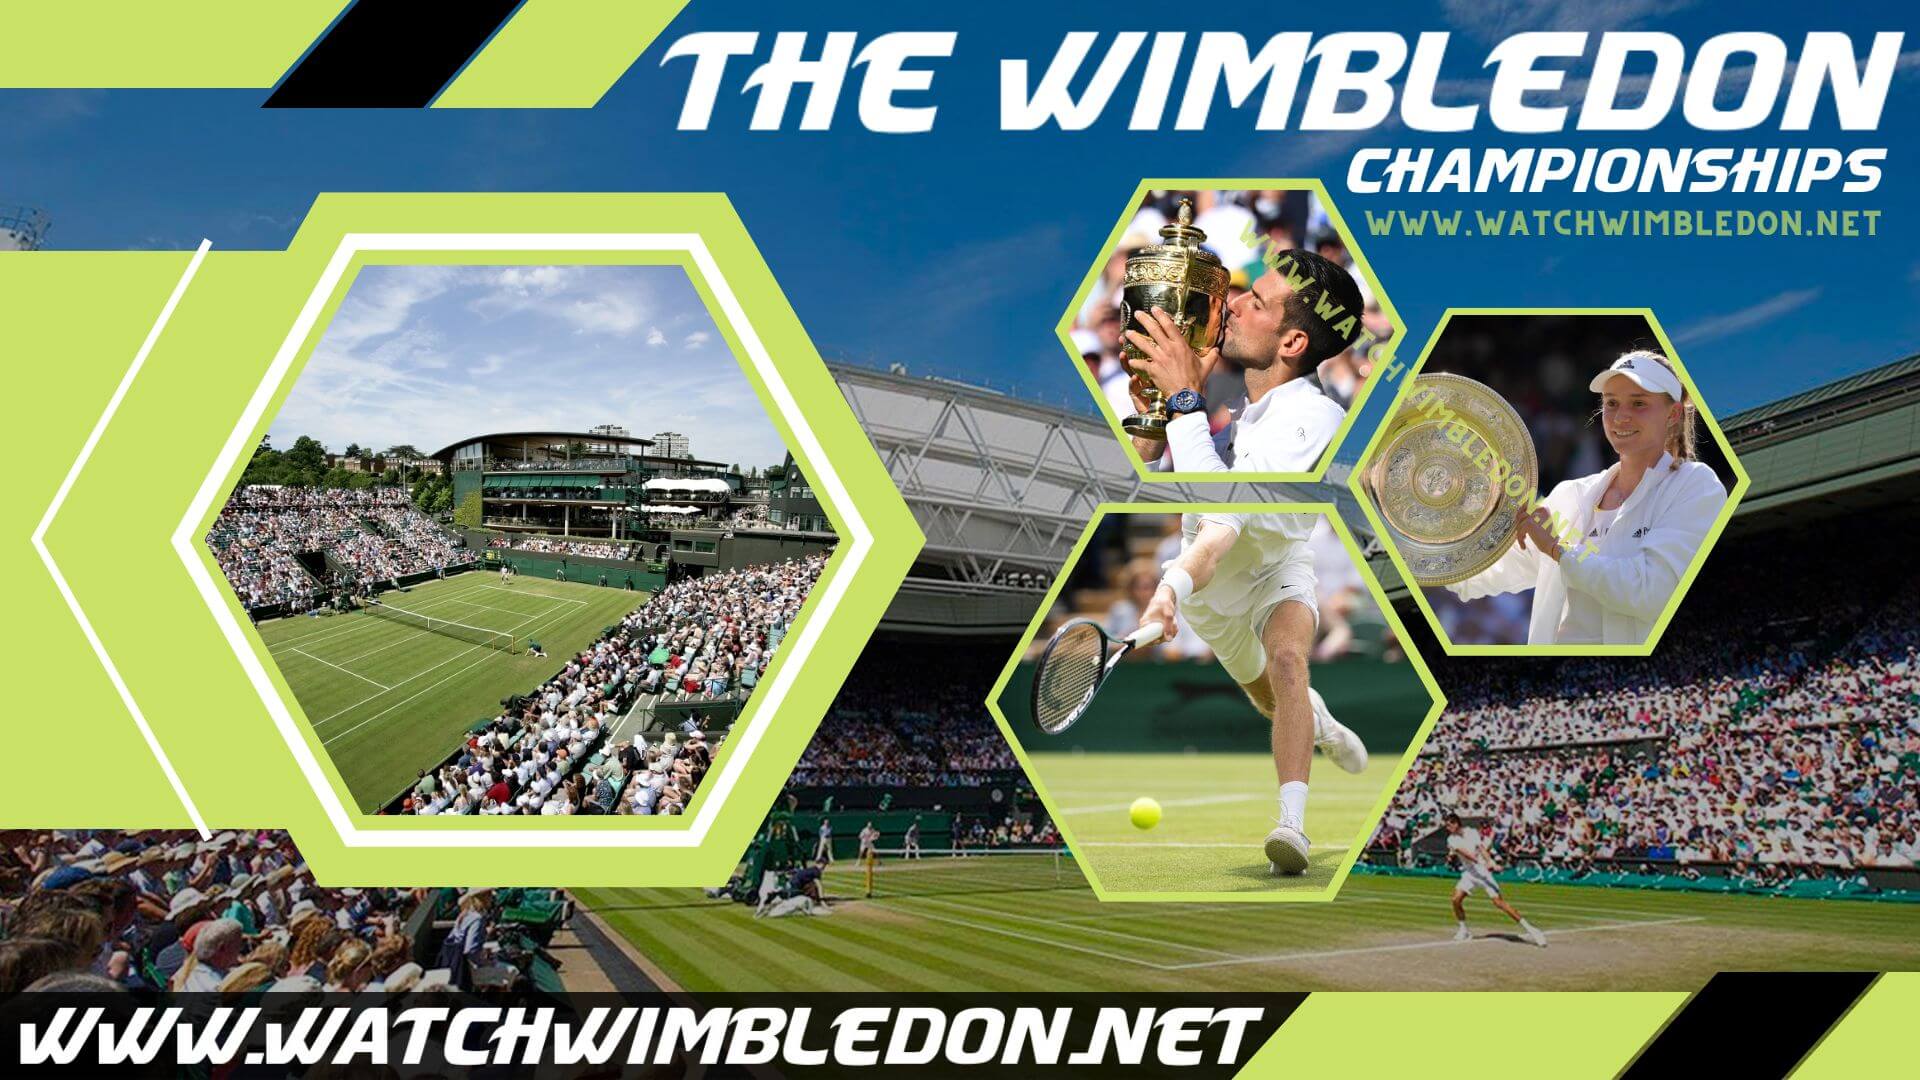 The Championships Wimbledon Teams